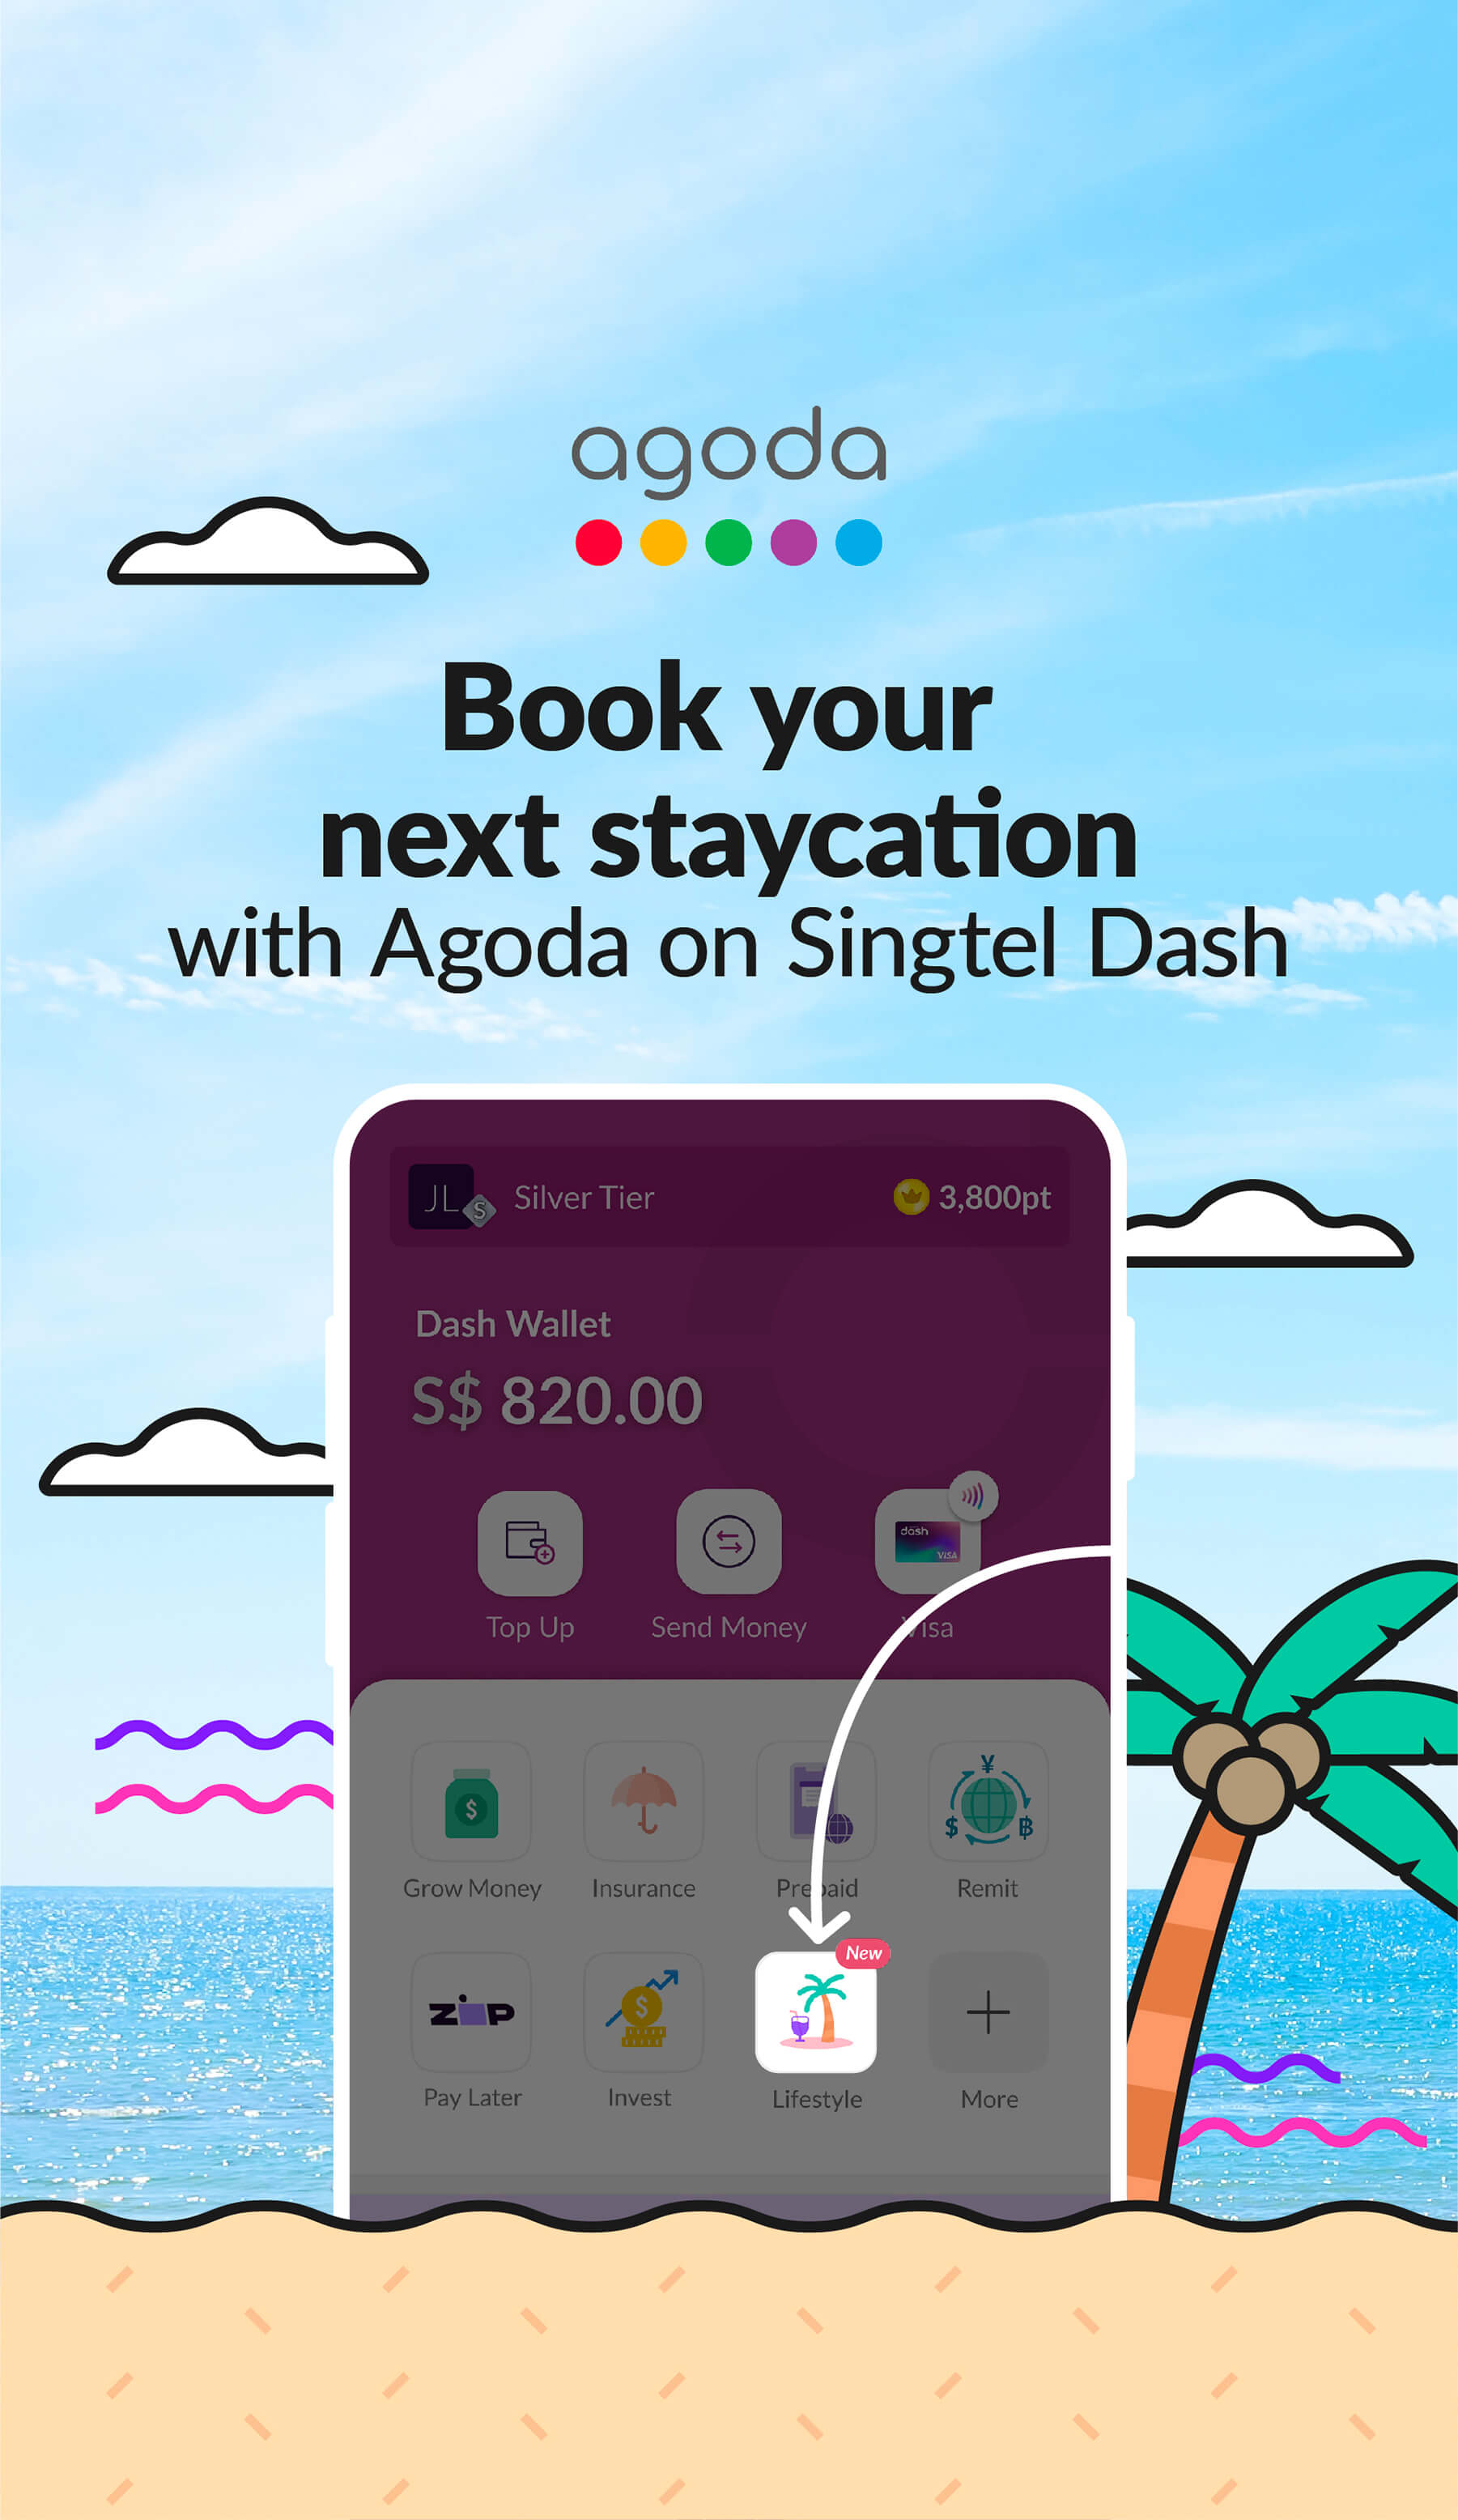 Book Your next staycation with agoda n singtel dash